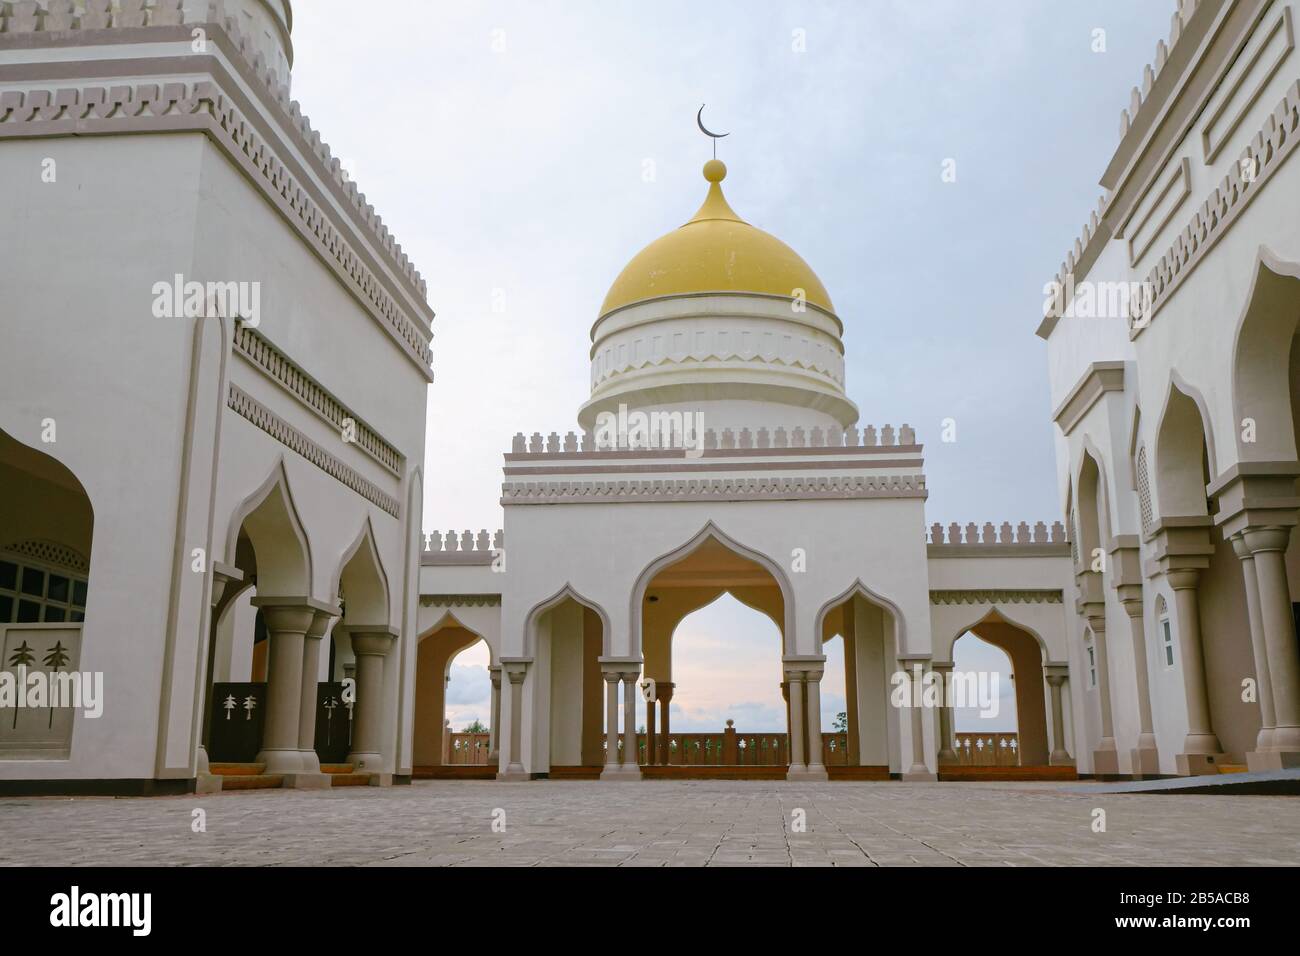 Beautiful interior view of the Cotabato Grand Mosque in Maguindanao, Philippines. Stock Photo